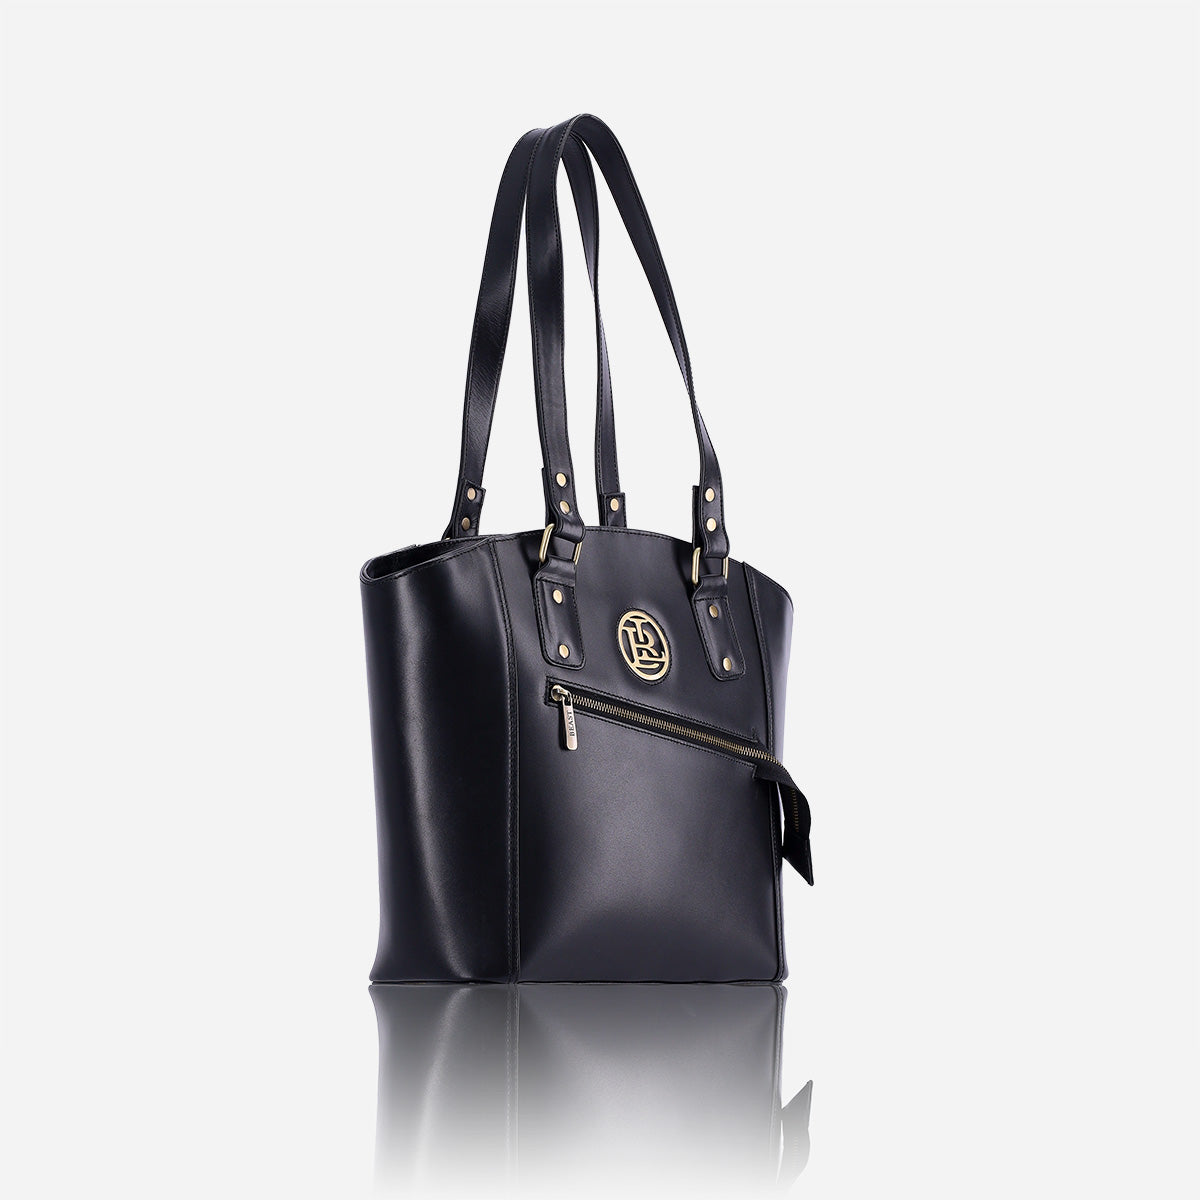 Corporate Black Leather Handbag